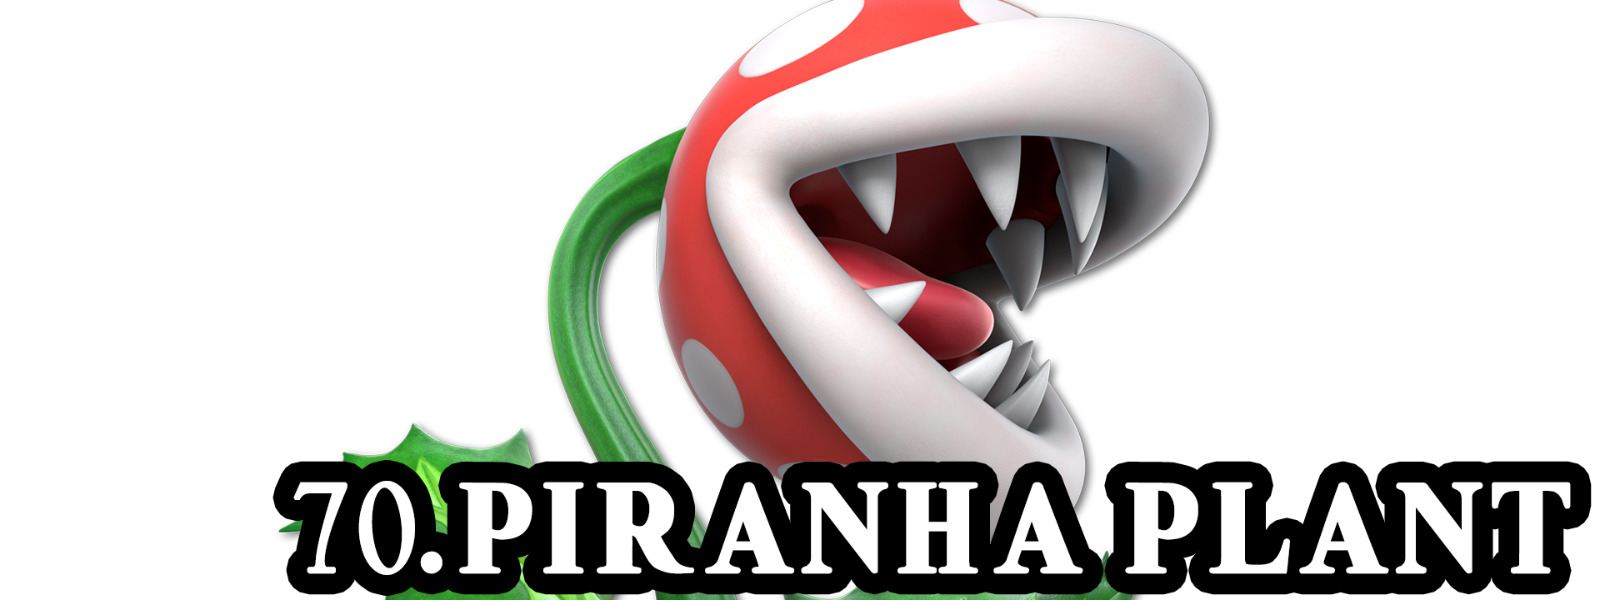 Piranha Plant Super Smash Bros Ultimate Walkthrough Neoseeker 3670